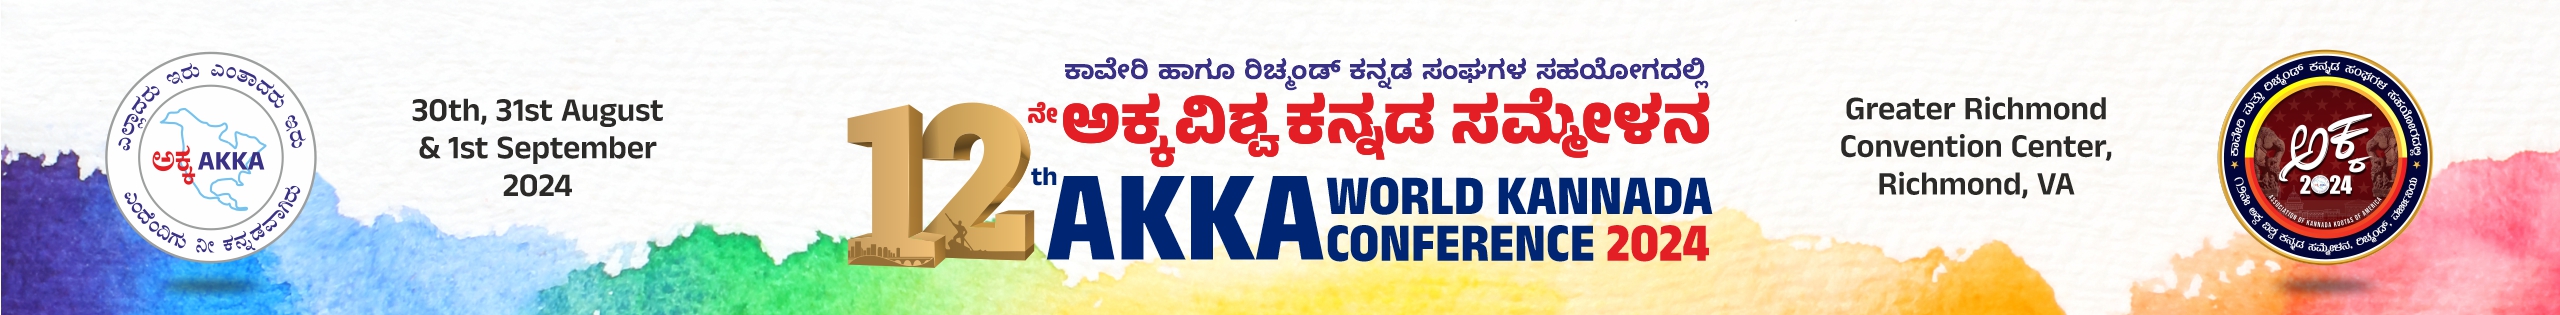 12th AKKA World Kannada Conference 2024